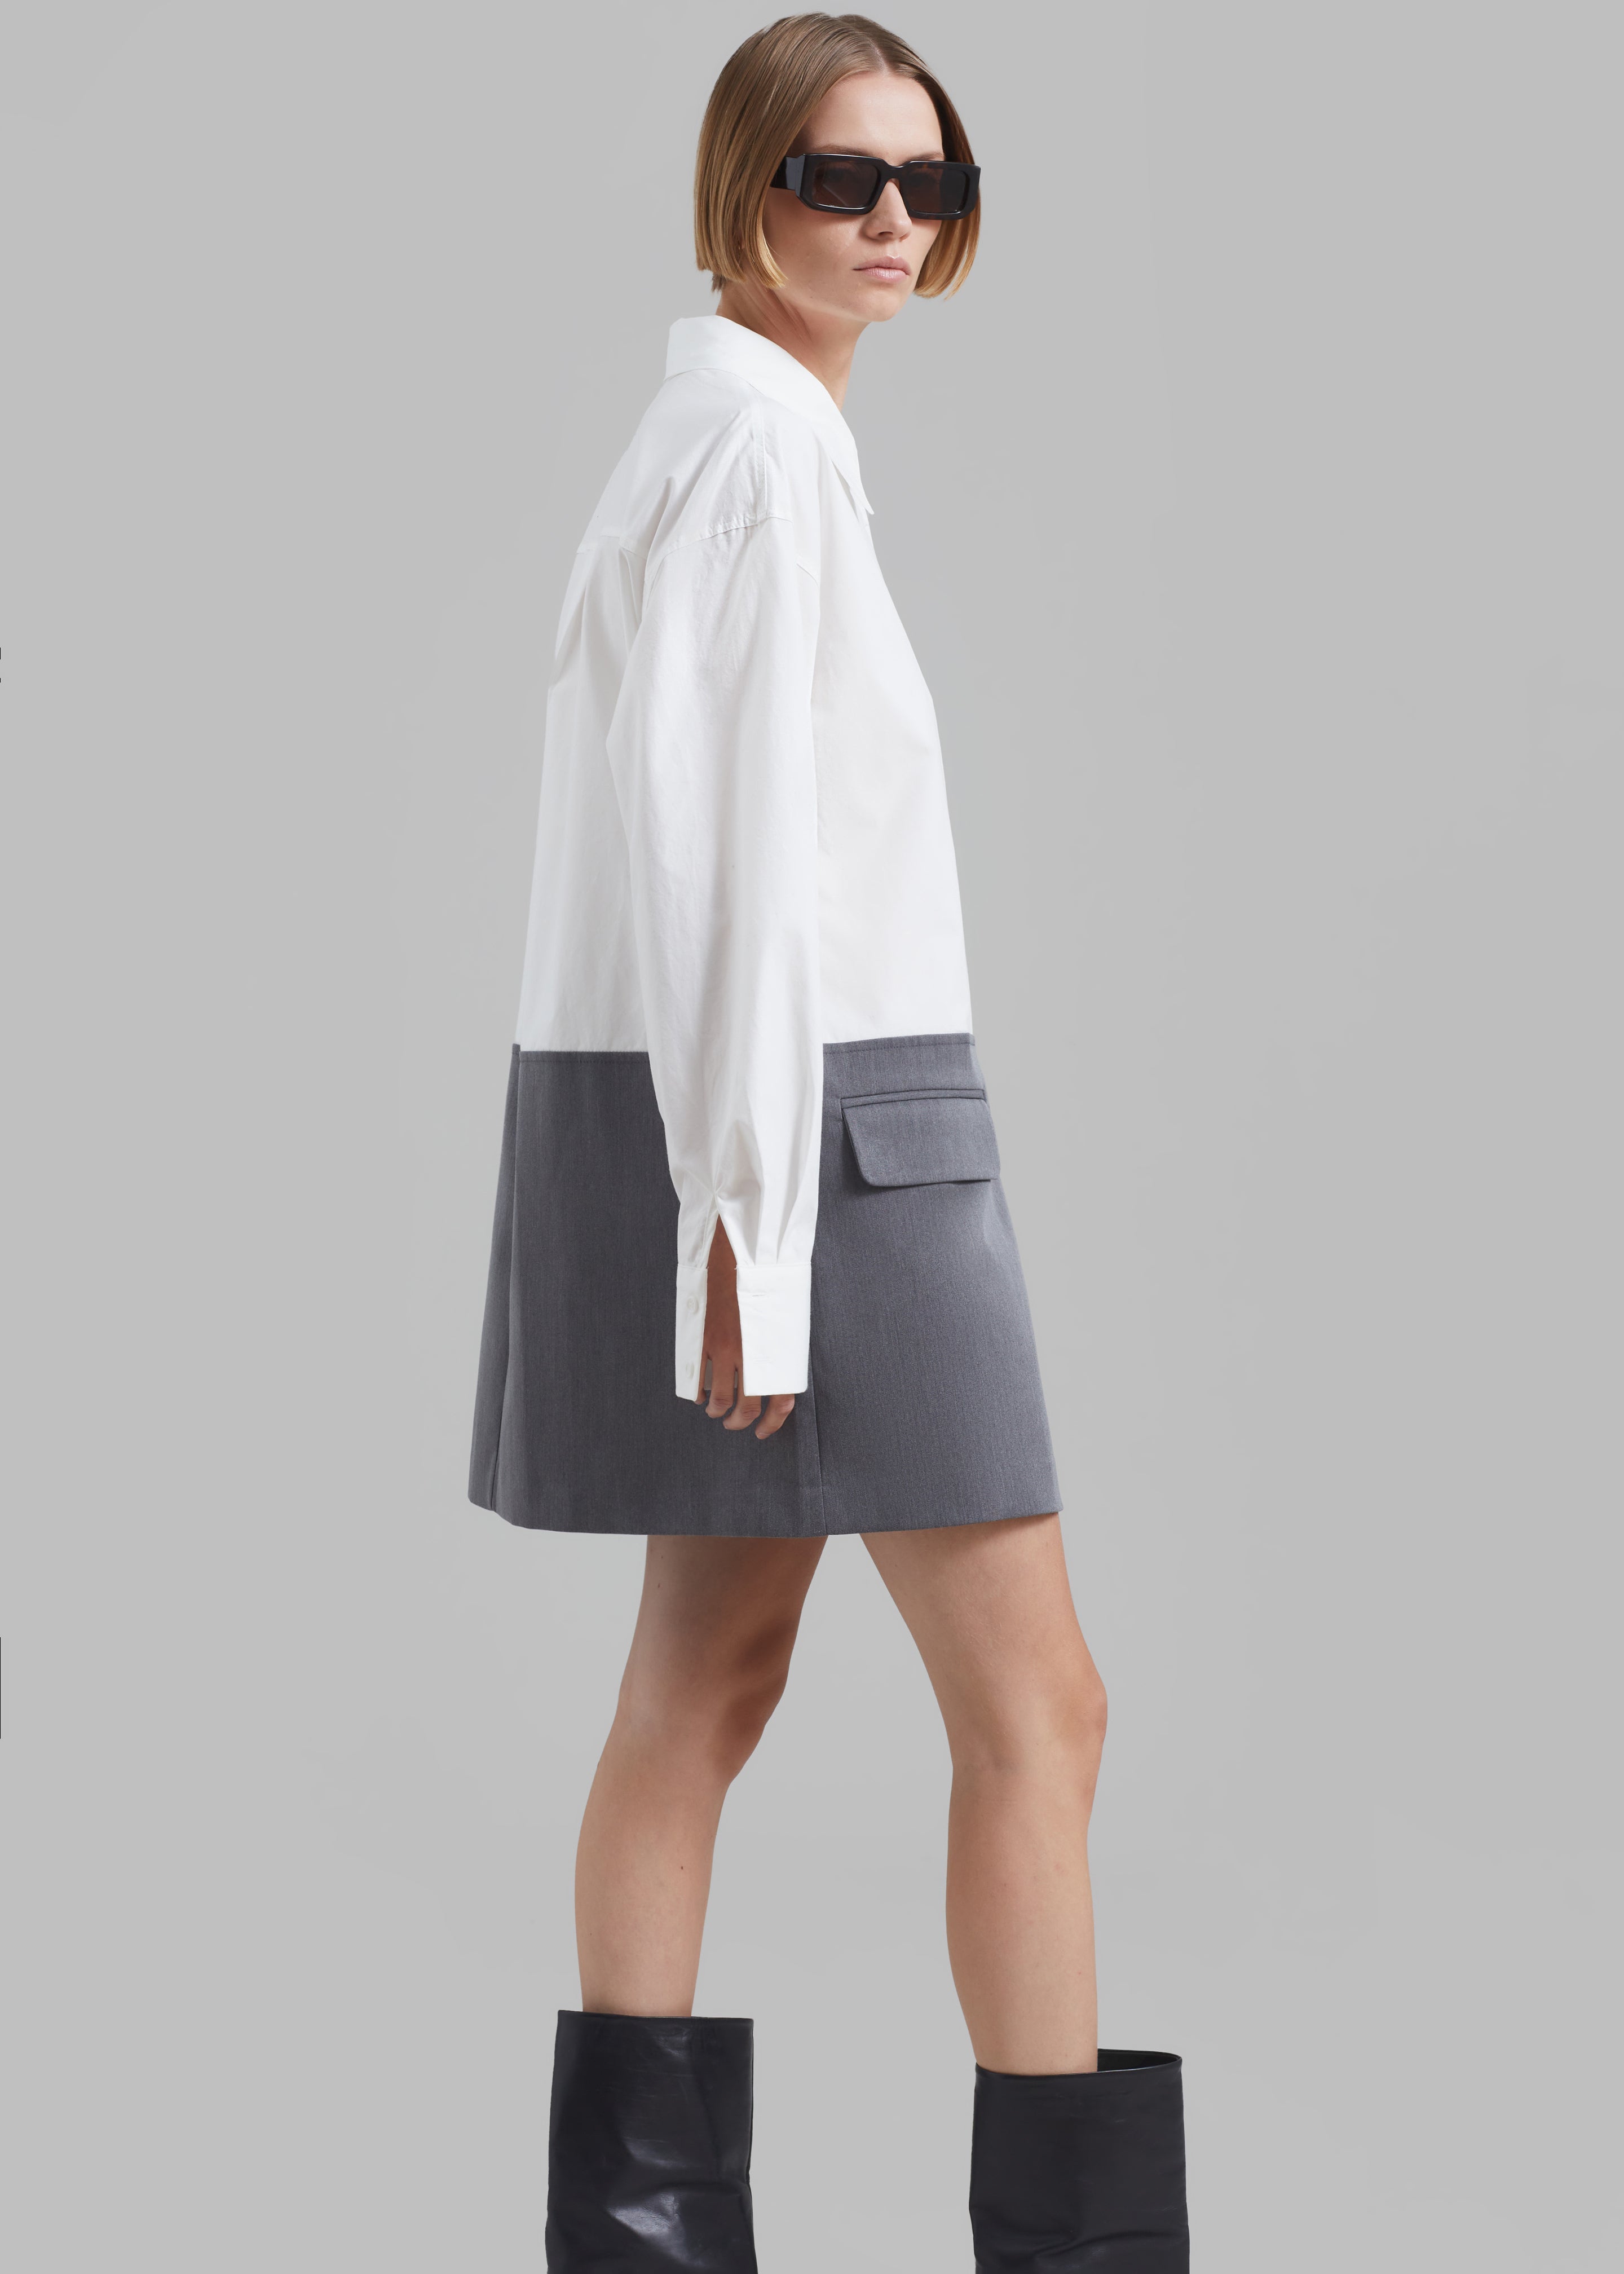 Marissa Shirt Dress - White/Grey - 2